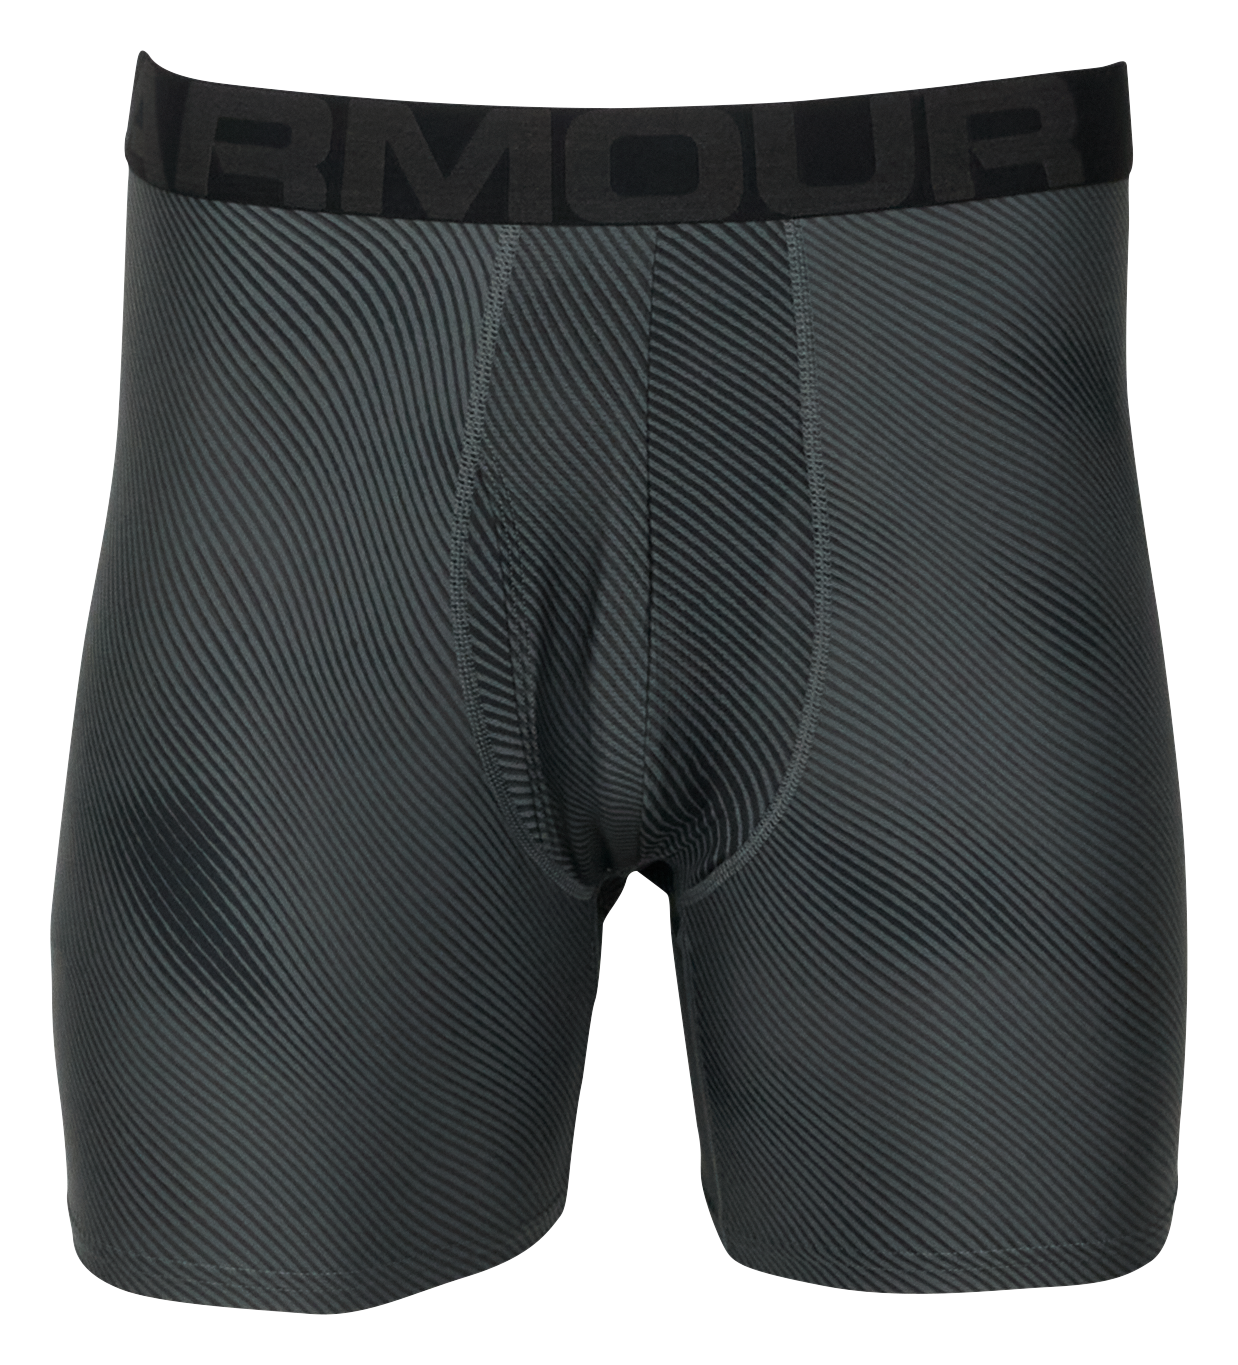 Under Armour Tech 6"" Patterned Boxerjock Shorts for Men - Pitch/Jet Gray - 2XL